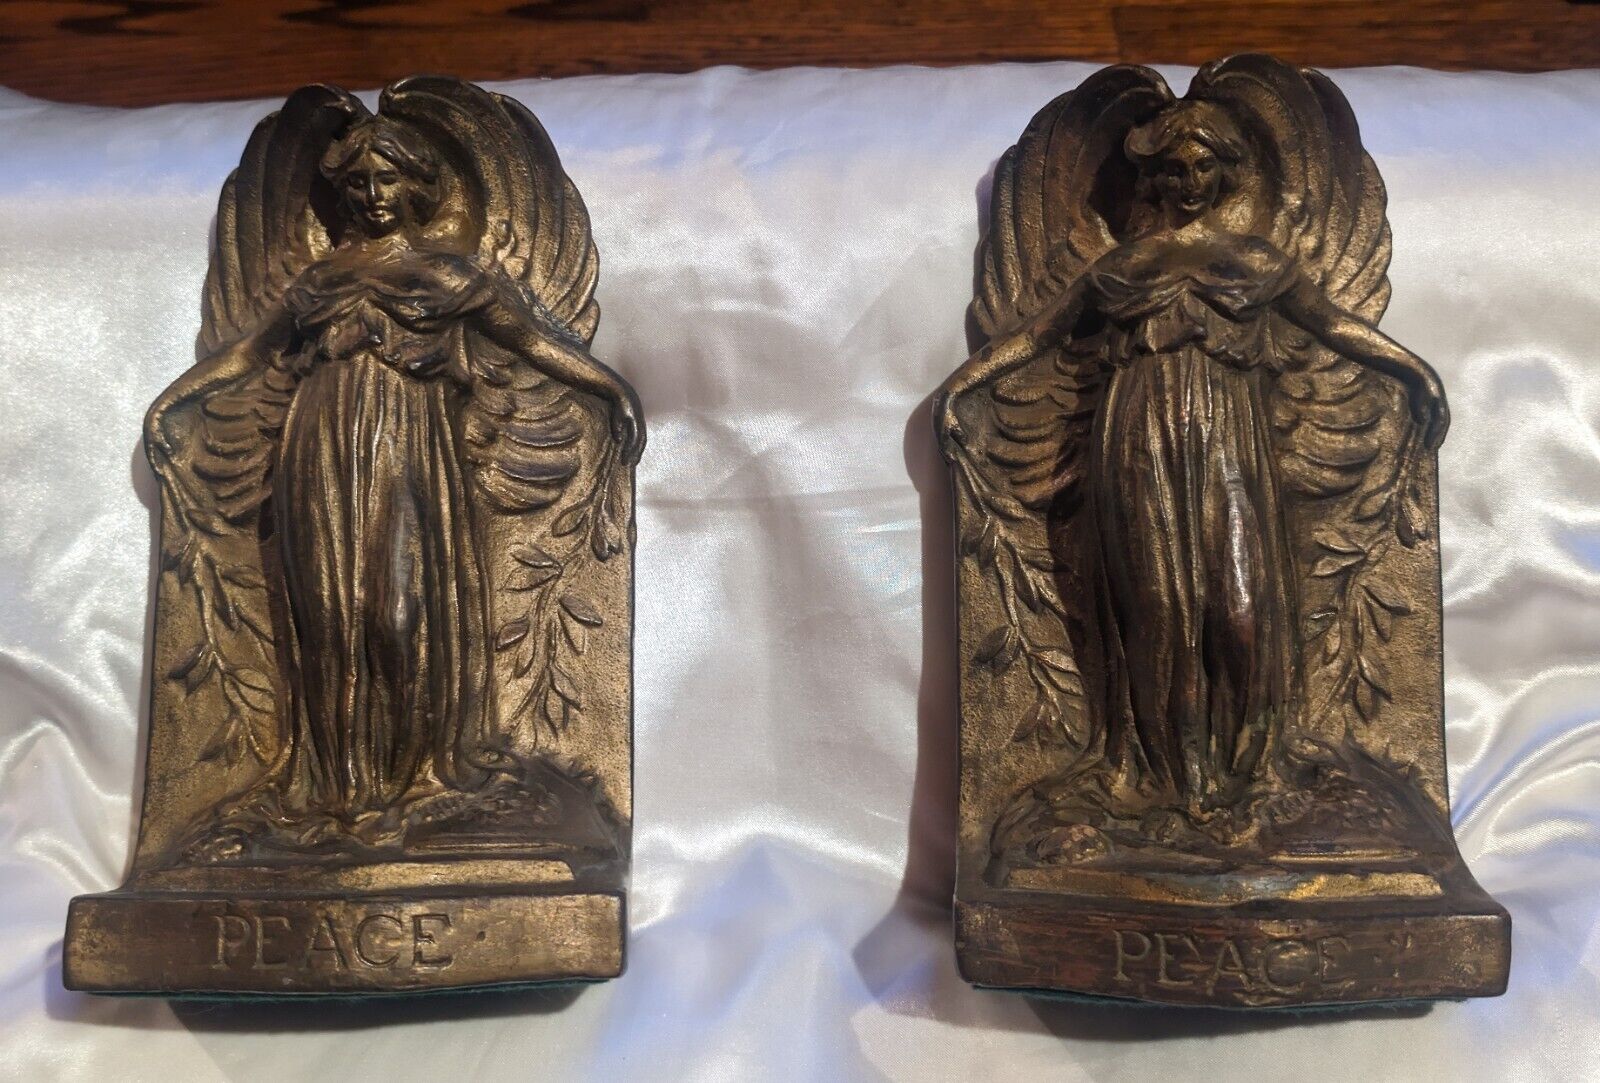 Rare Antique 1915 Bronze S Morani PEACE Angels Statue Sculpture Bookends